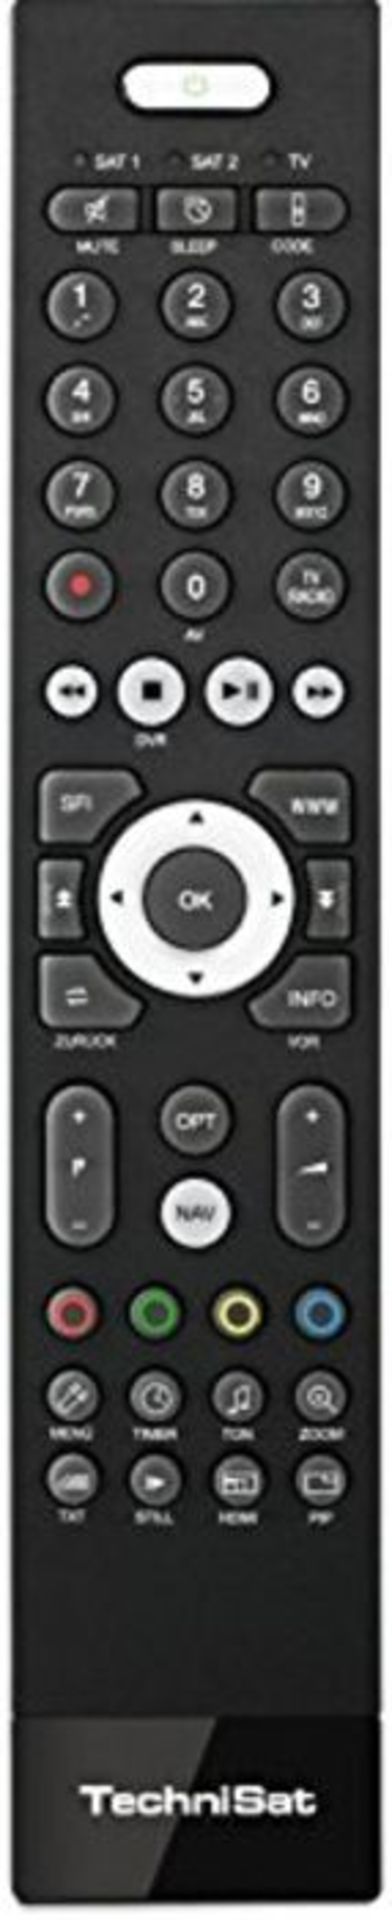 Technisat TechniControl Remote Control for Digital Receiver Black - Image 3 of 4